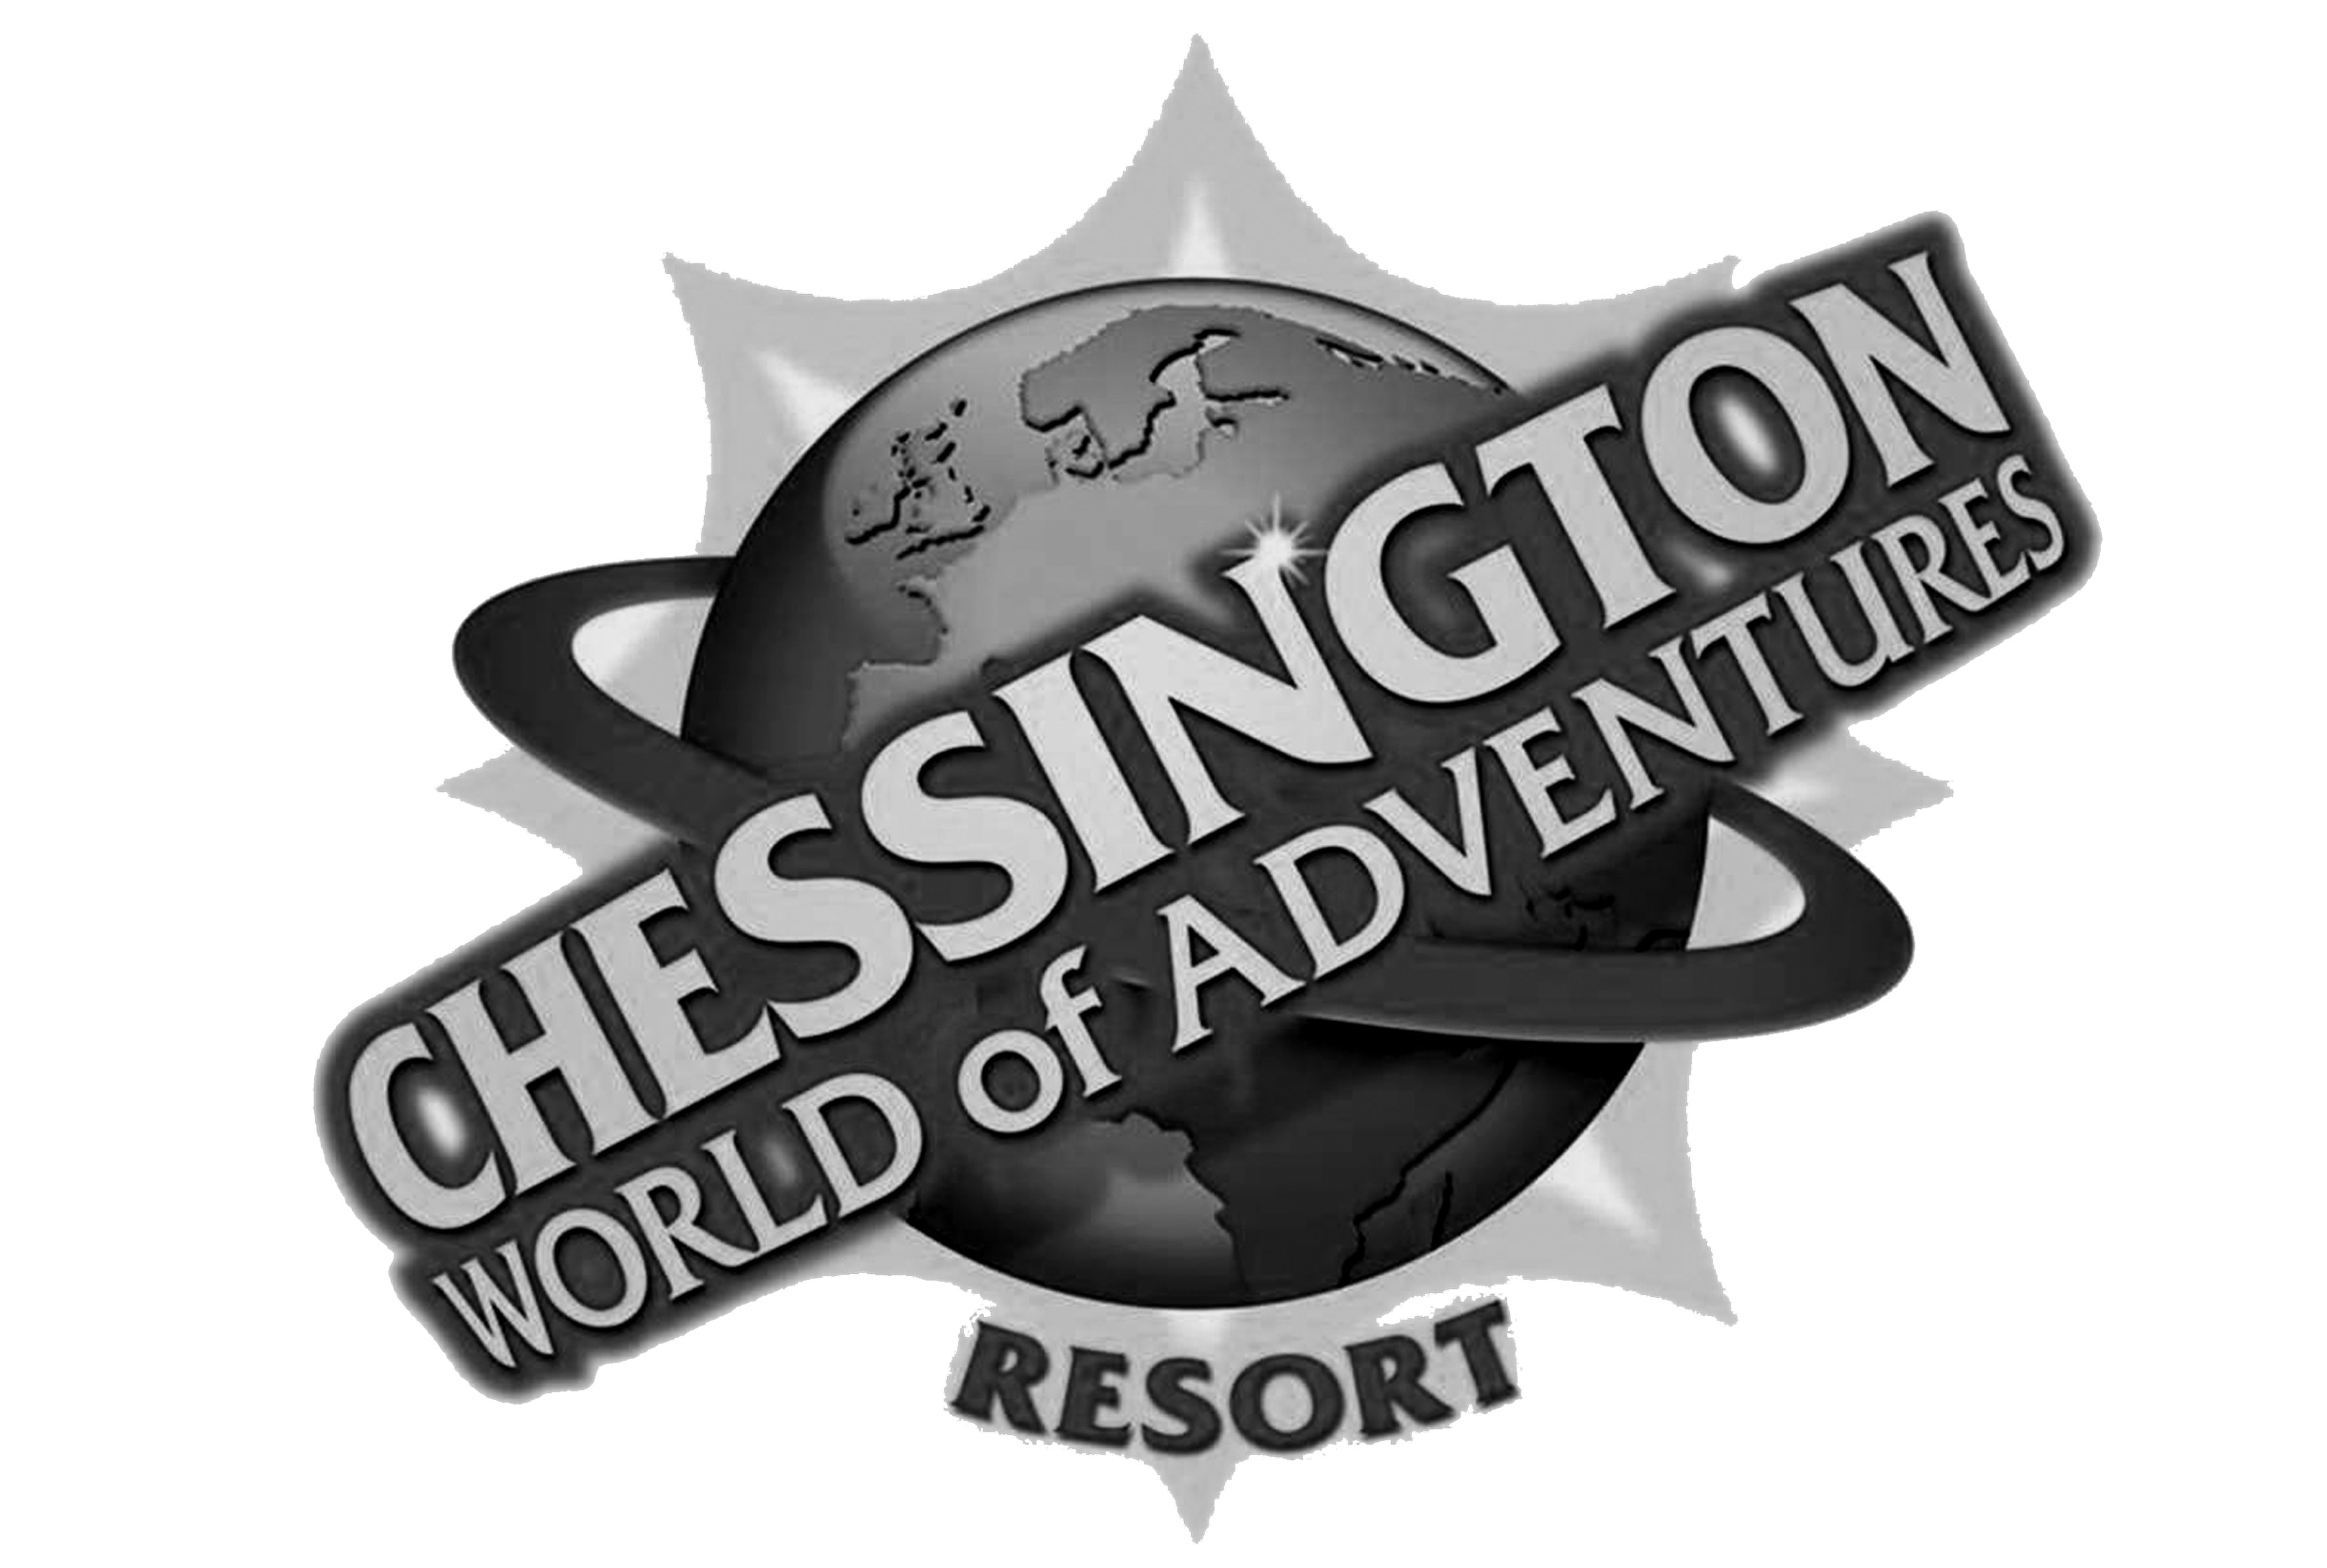 Chessington logo